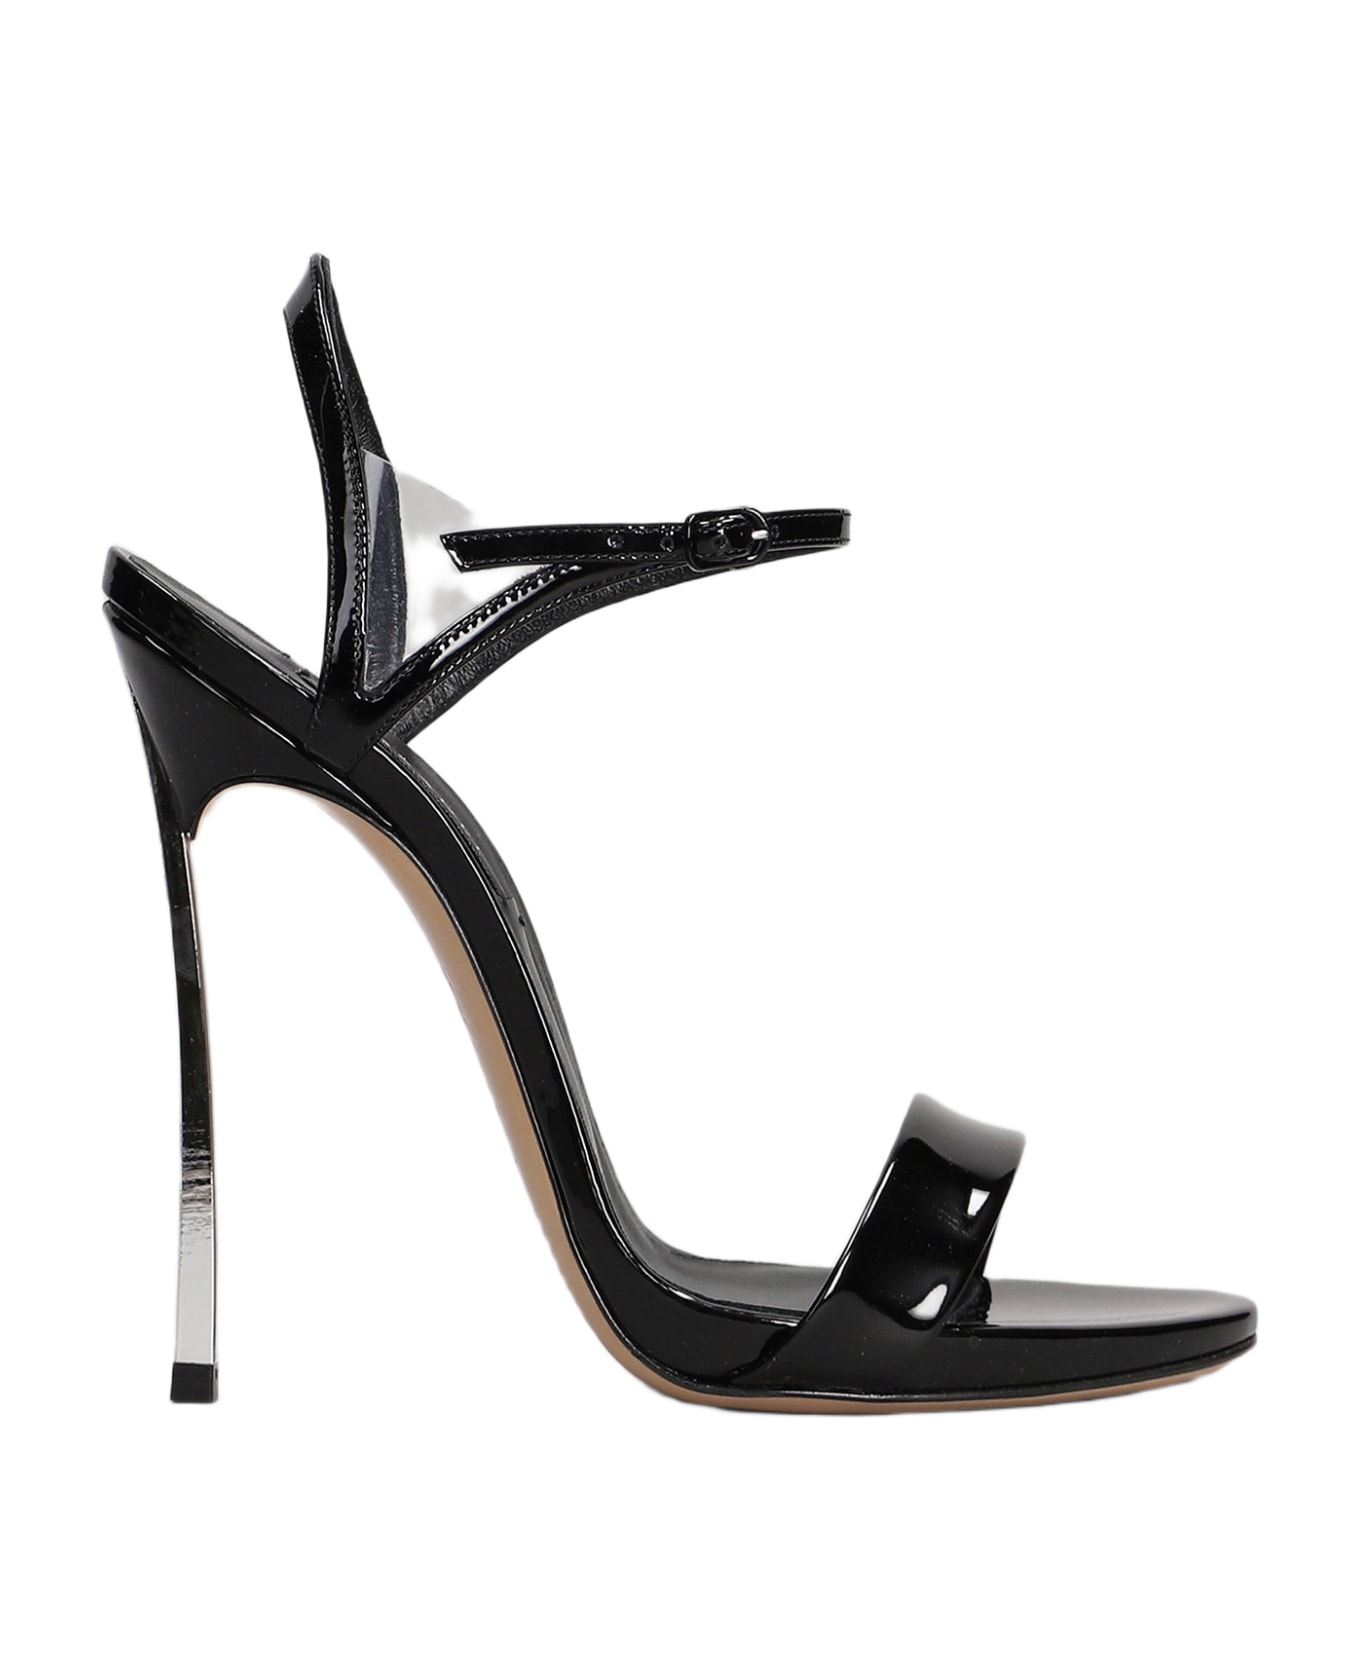 Casadei Blade Sandals In Black Patent Leather - black